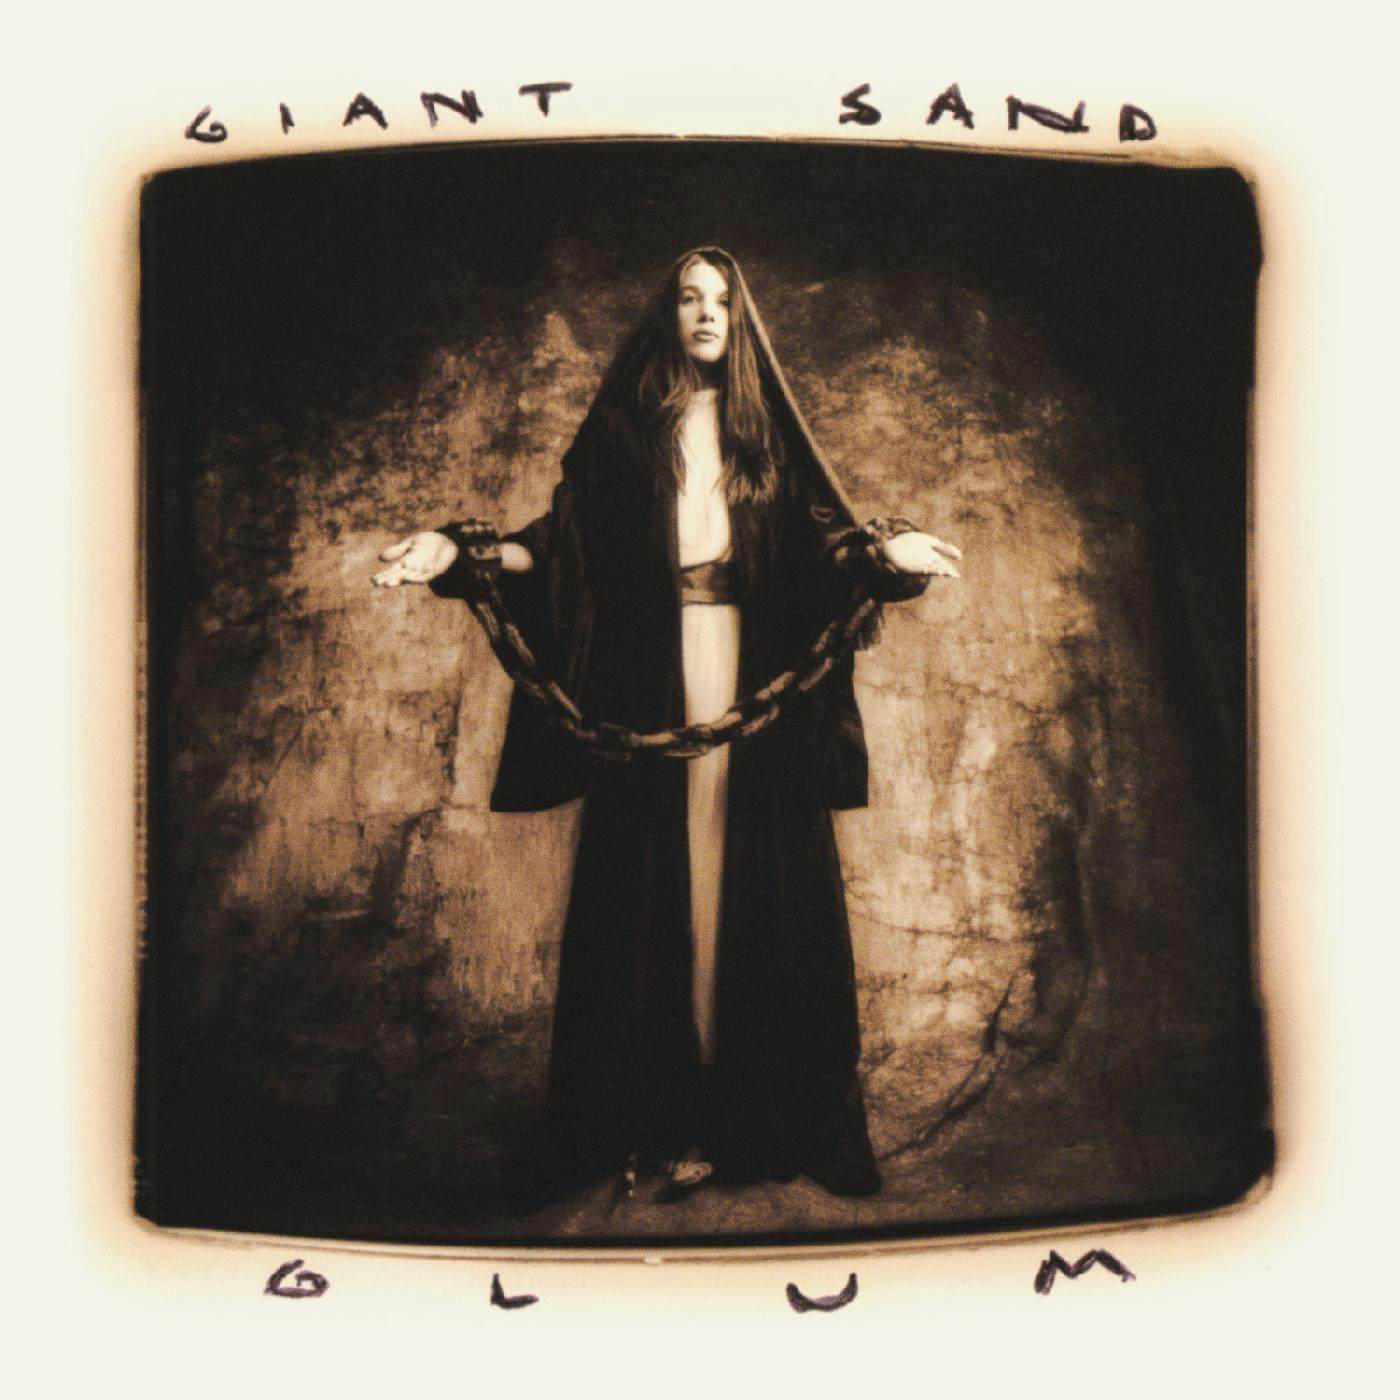 Giant Sand GLUM (25TH ANNIVERSARY EDITION/2LP/5MM SPINE SLEEVE) Vinyl Record